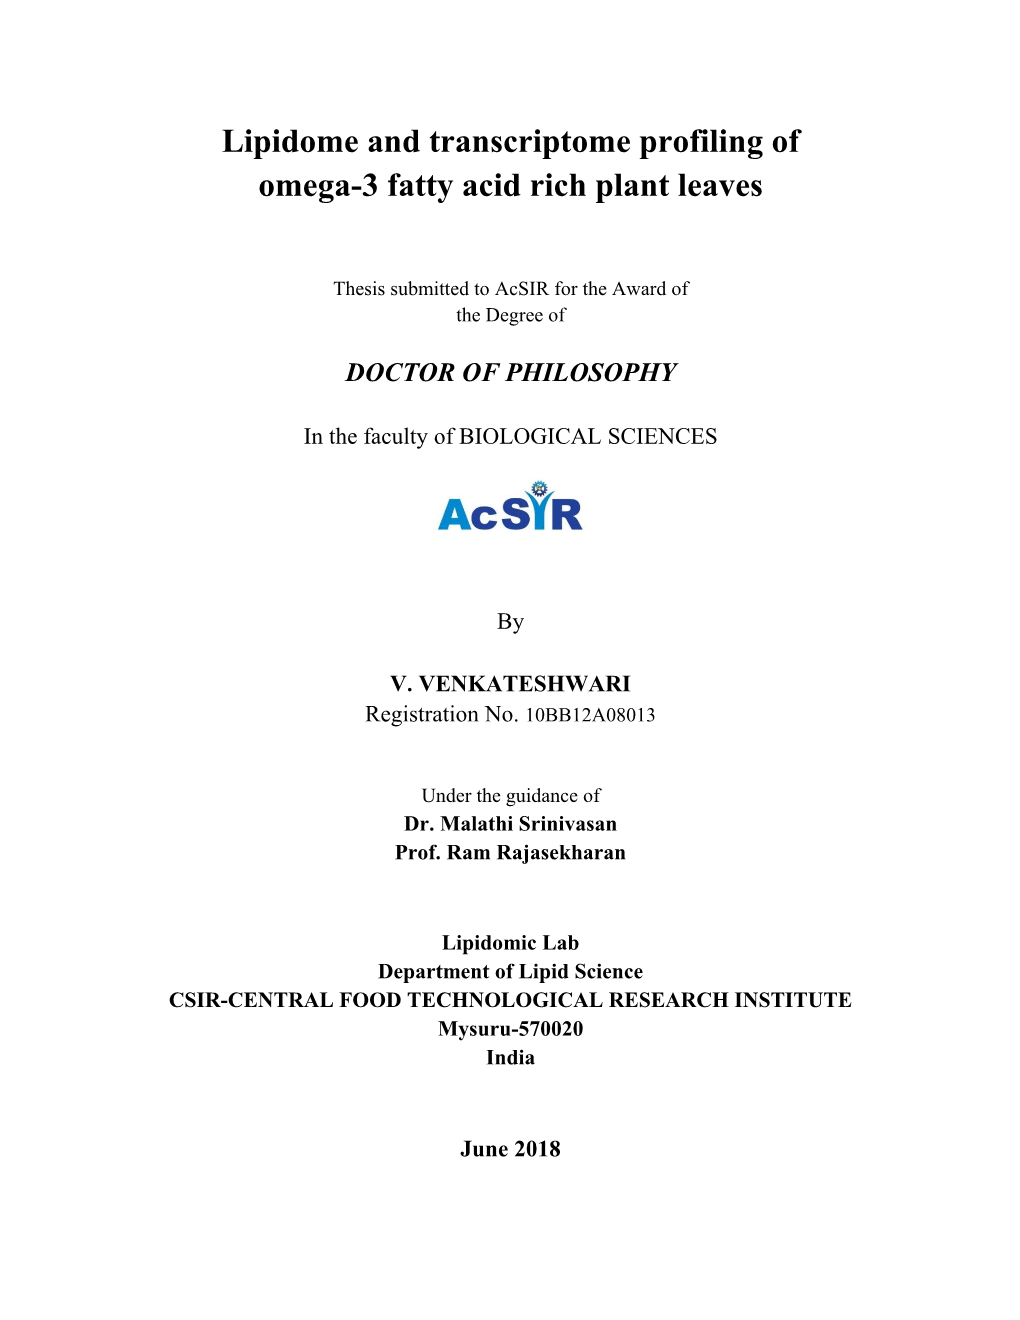 Lipidome and Transcriptome Profiling of Omega-3 Fatty Acid Rich Plant Leaves